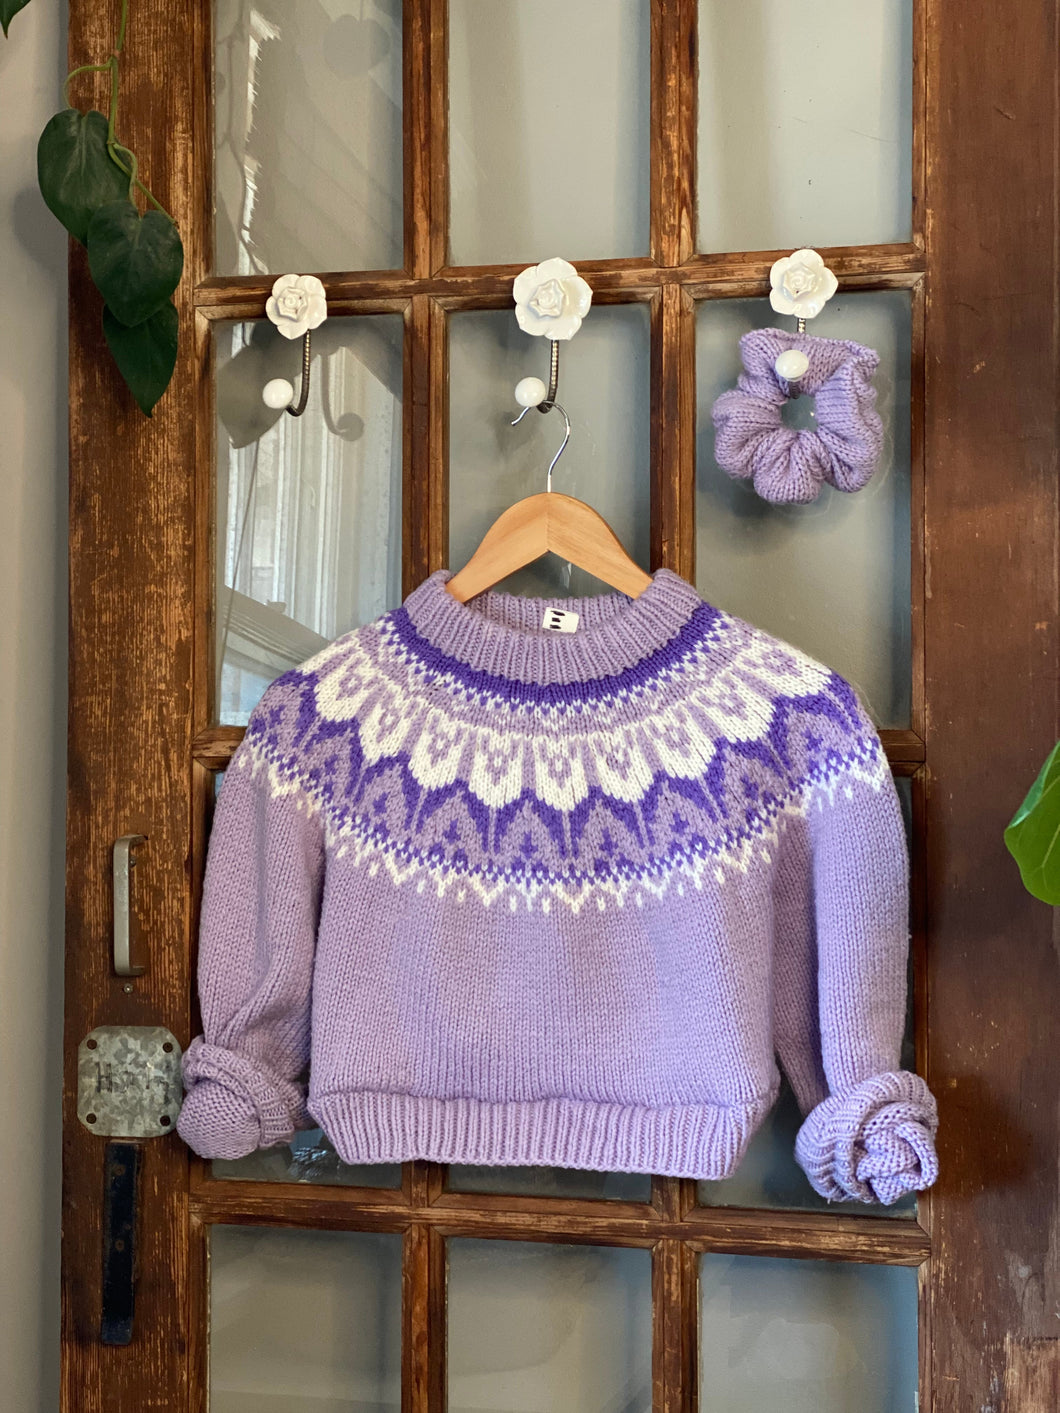 the petite lavender fair isle sweater